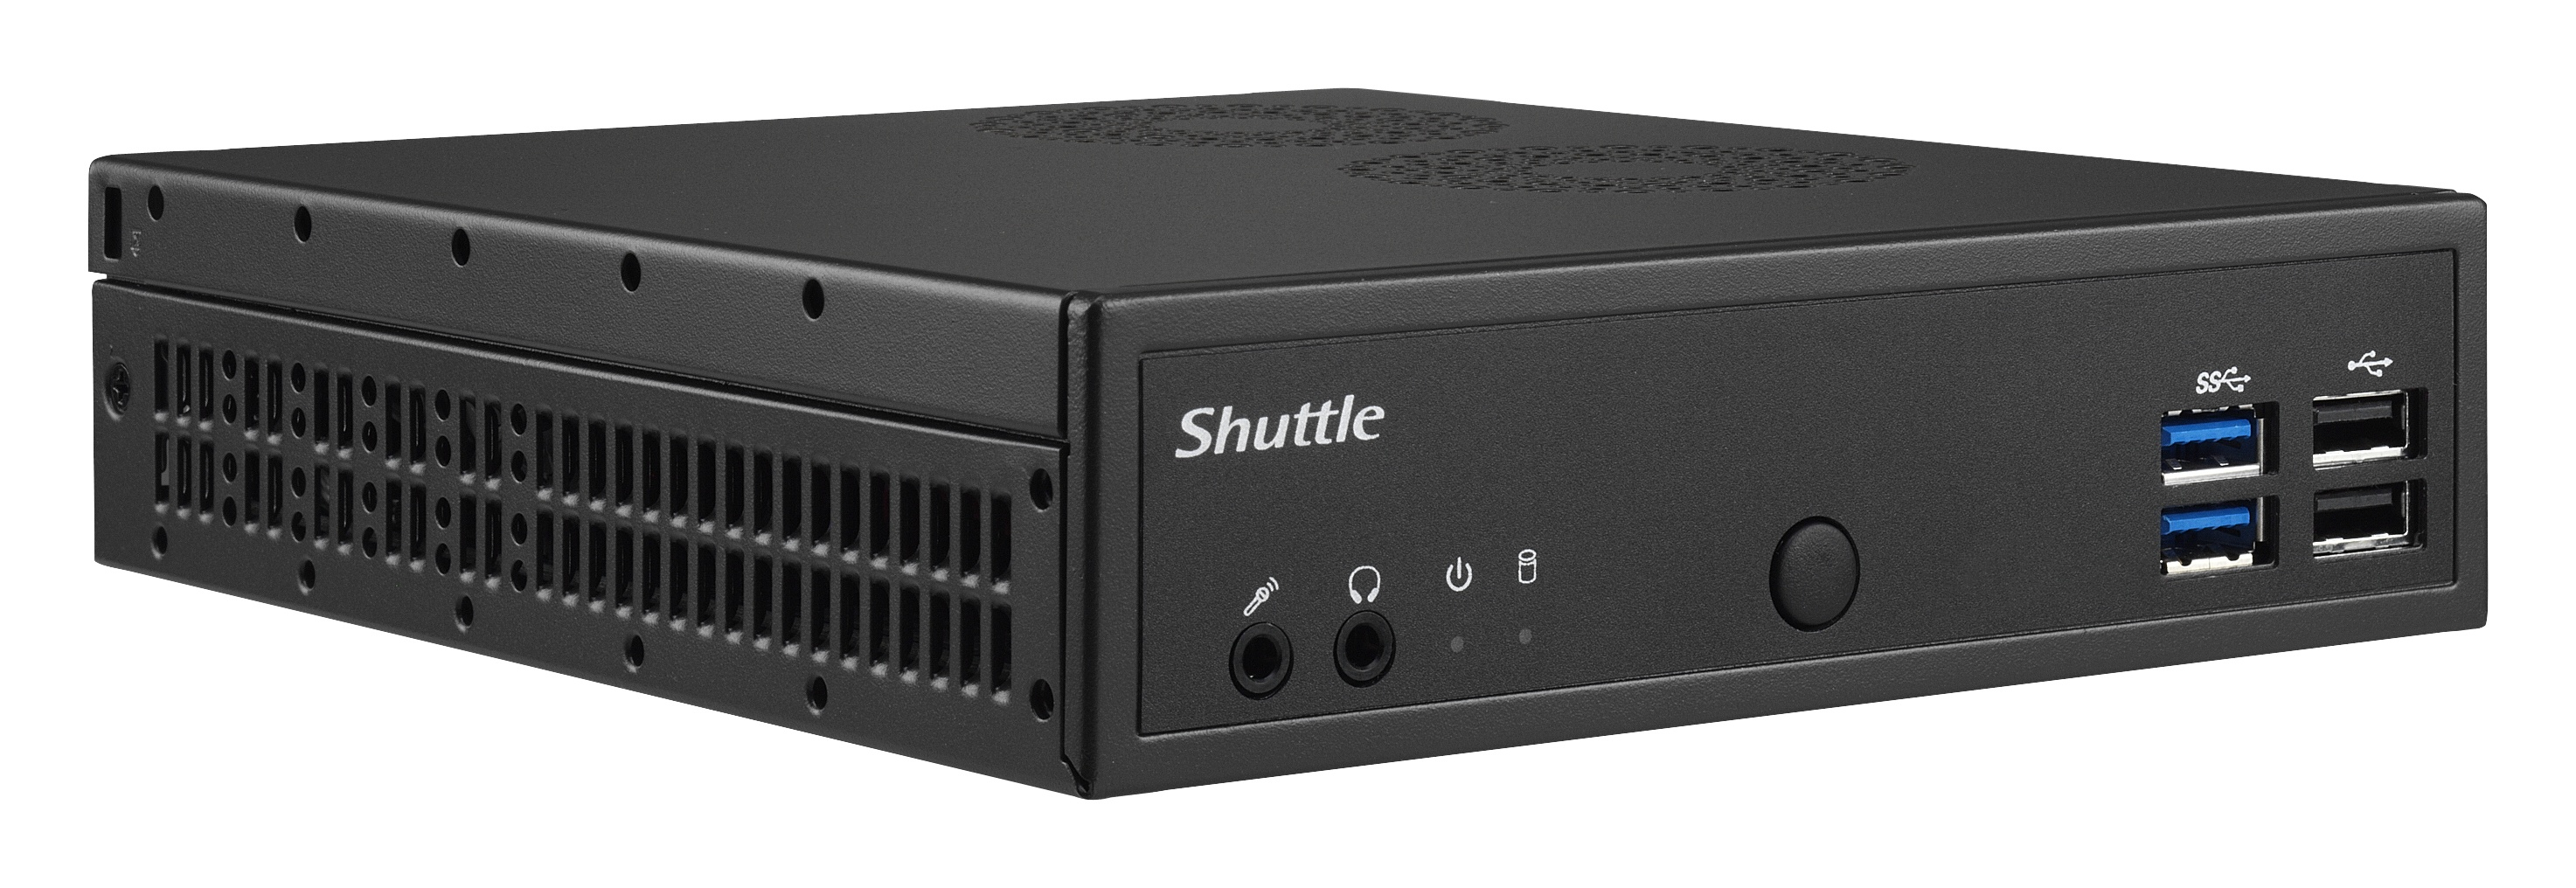 Shuttle XP? slim DH02U 3865U 1,8 GHz 1.35L sized PC Nero BGA 1356